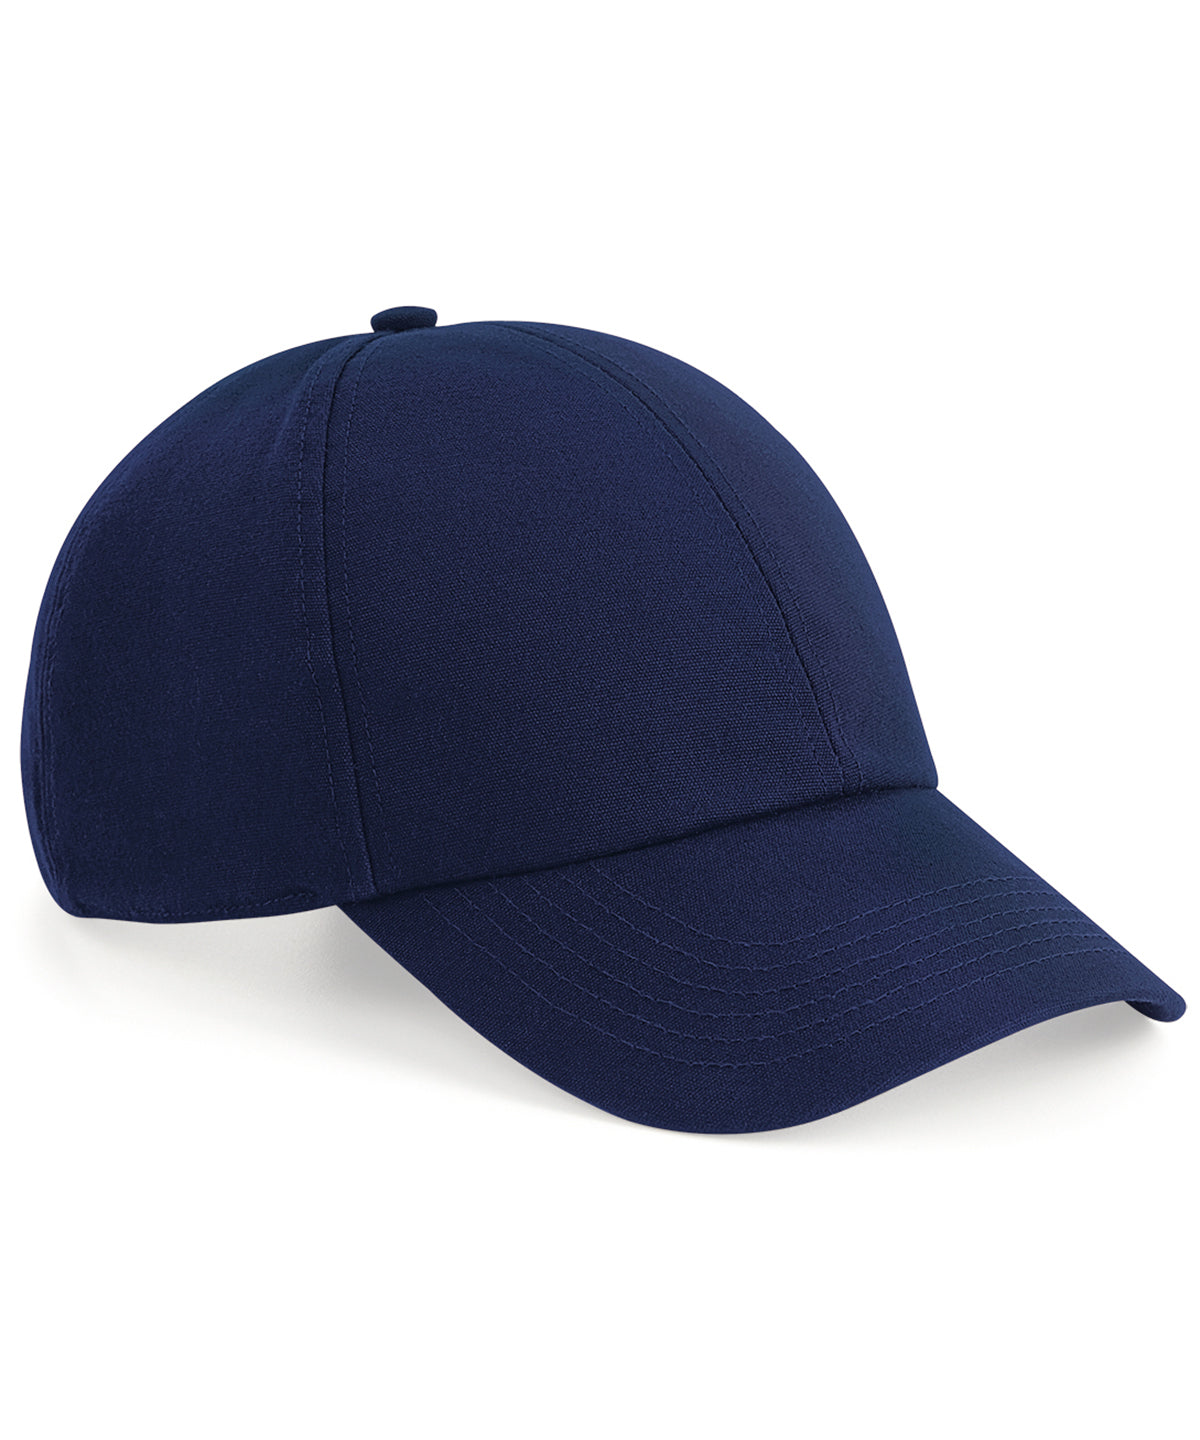 Personalised Caps - Navy Beechfield Organic cotton 6-panel cap